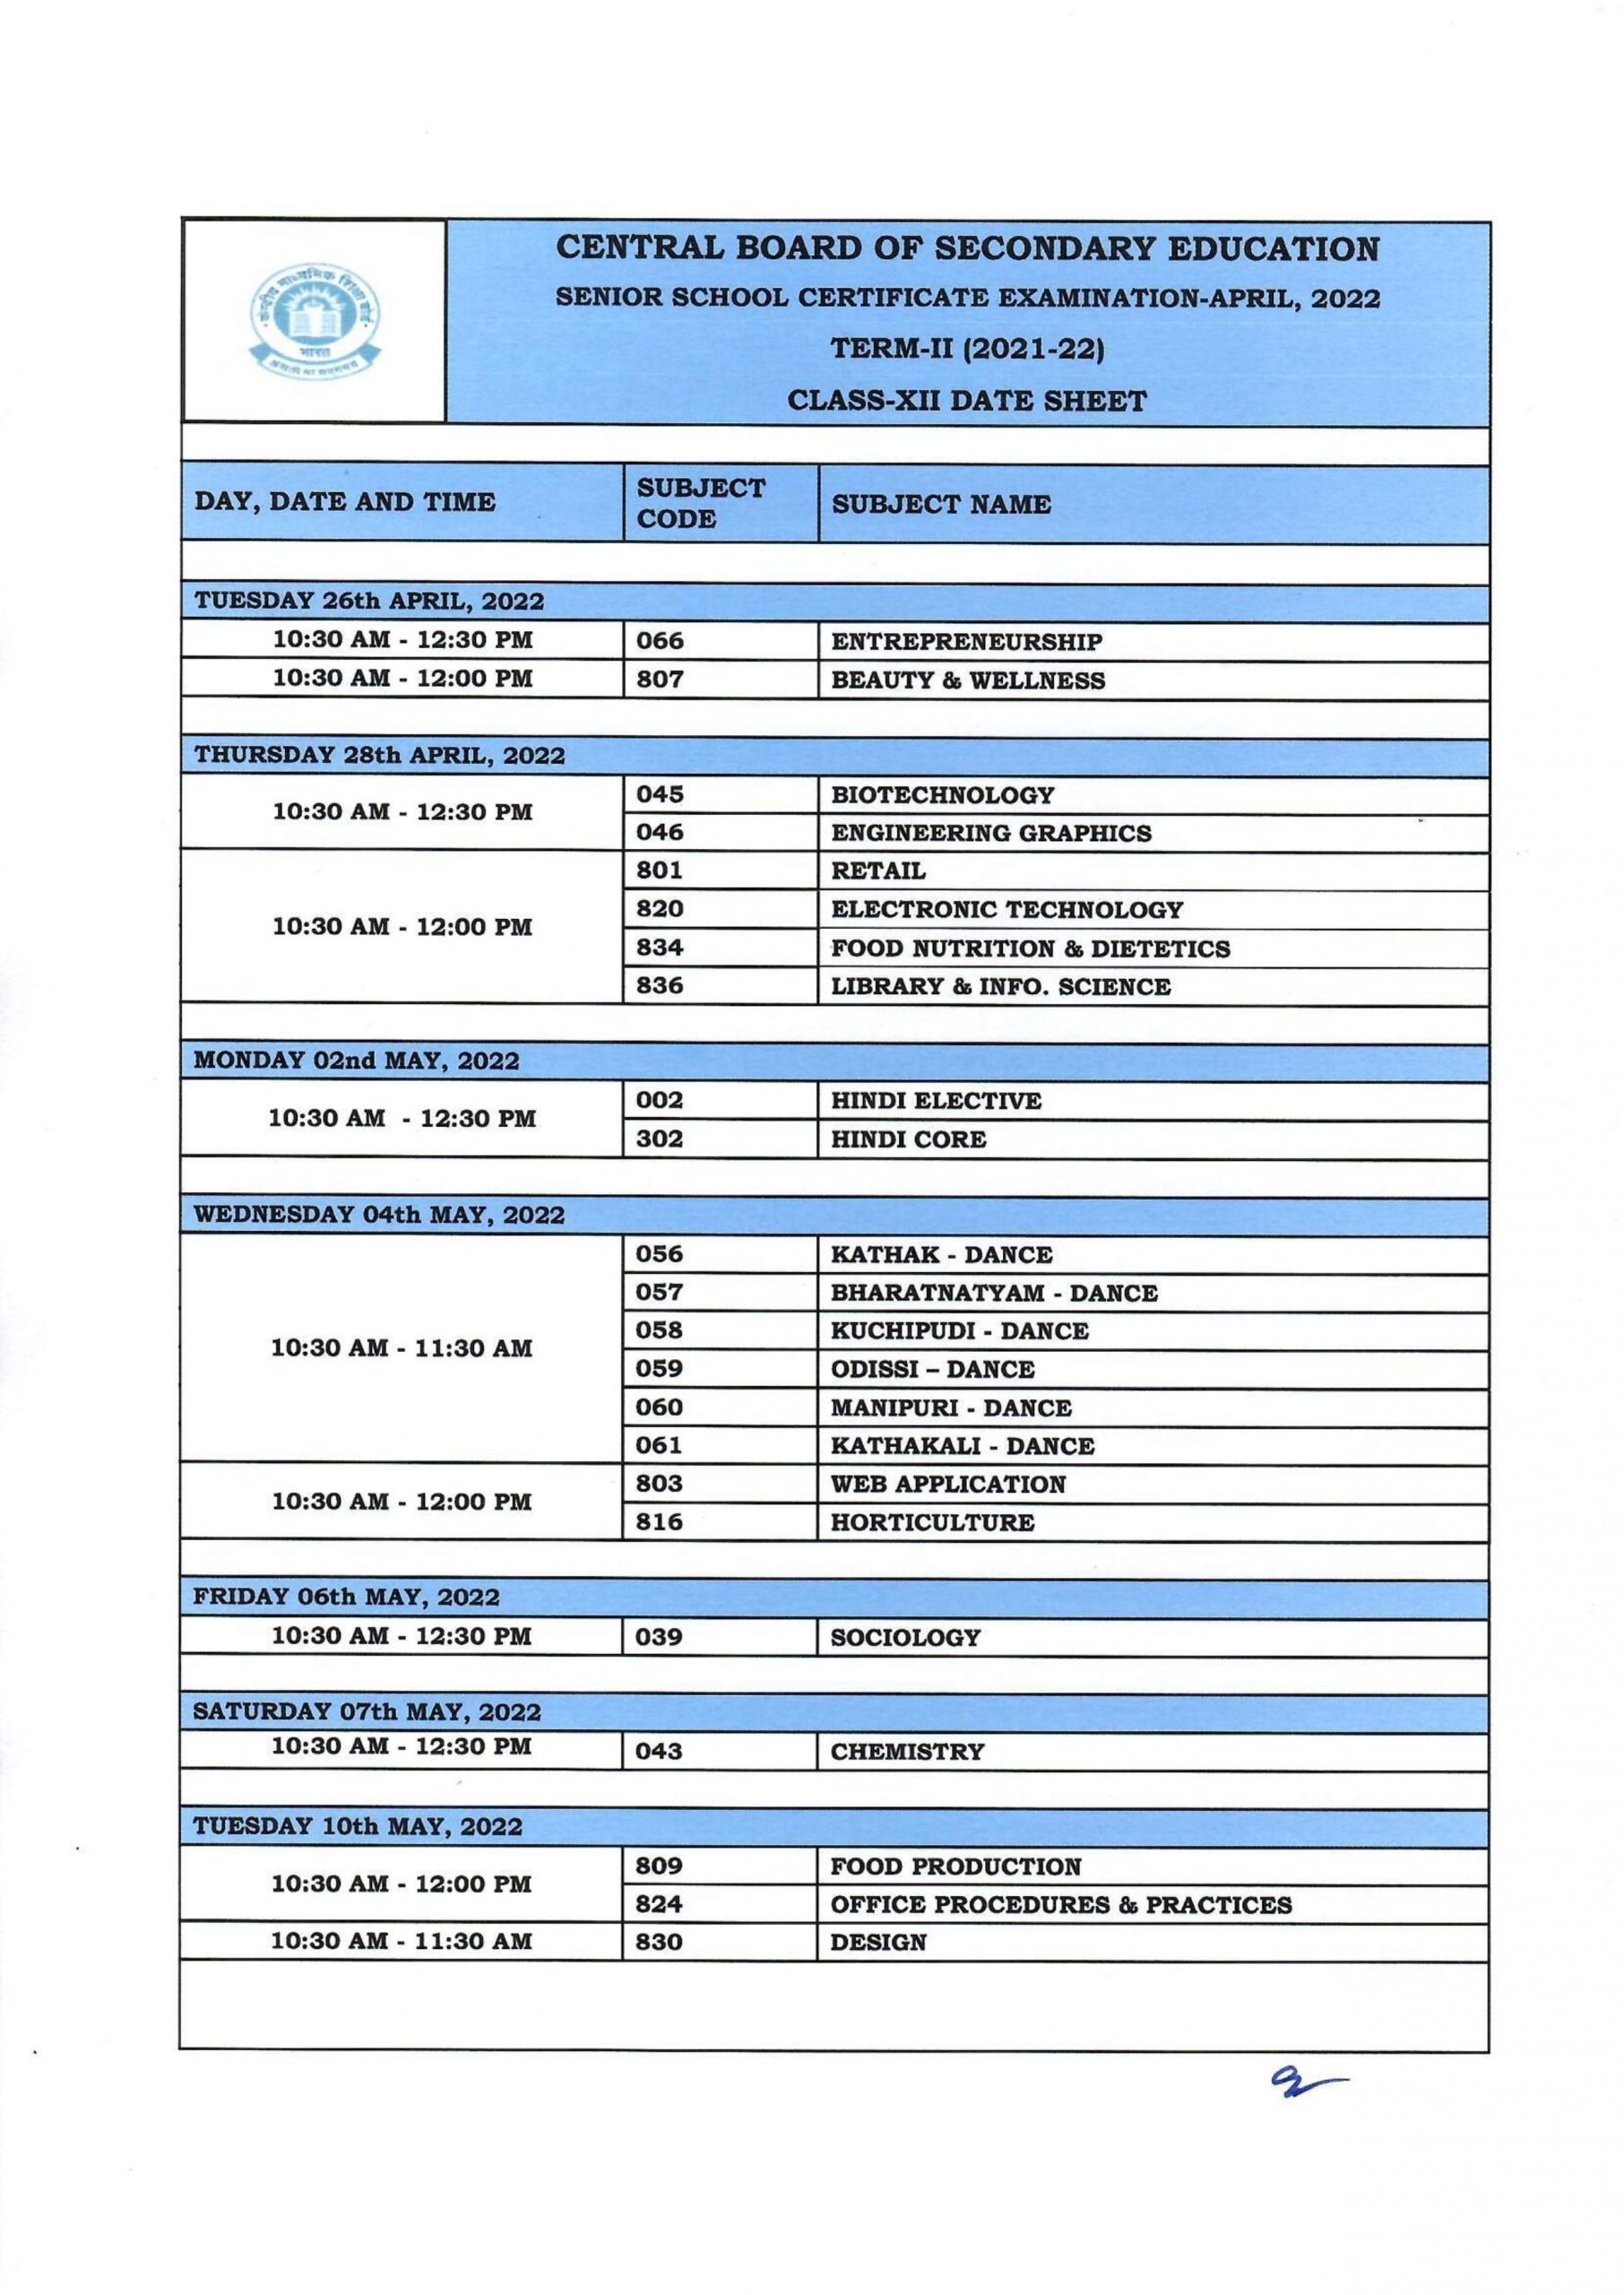 CBSE Class 12th Term 2 Timetable 2022